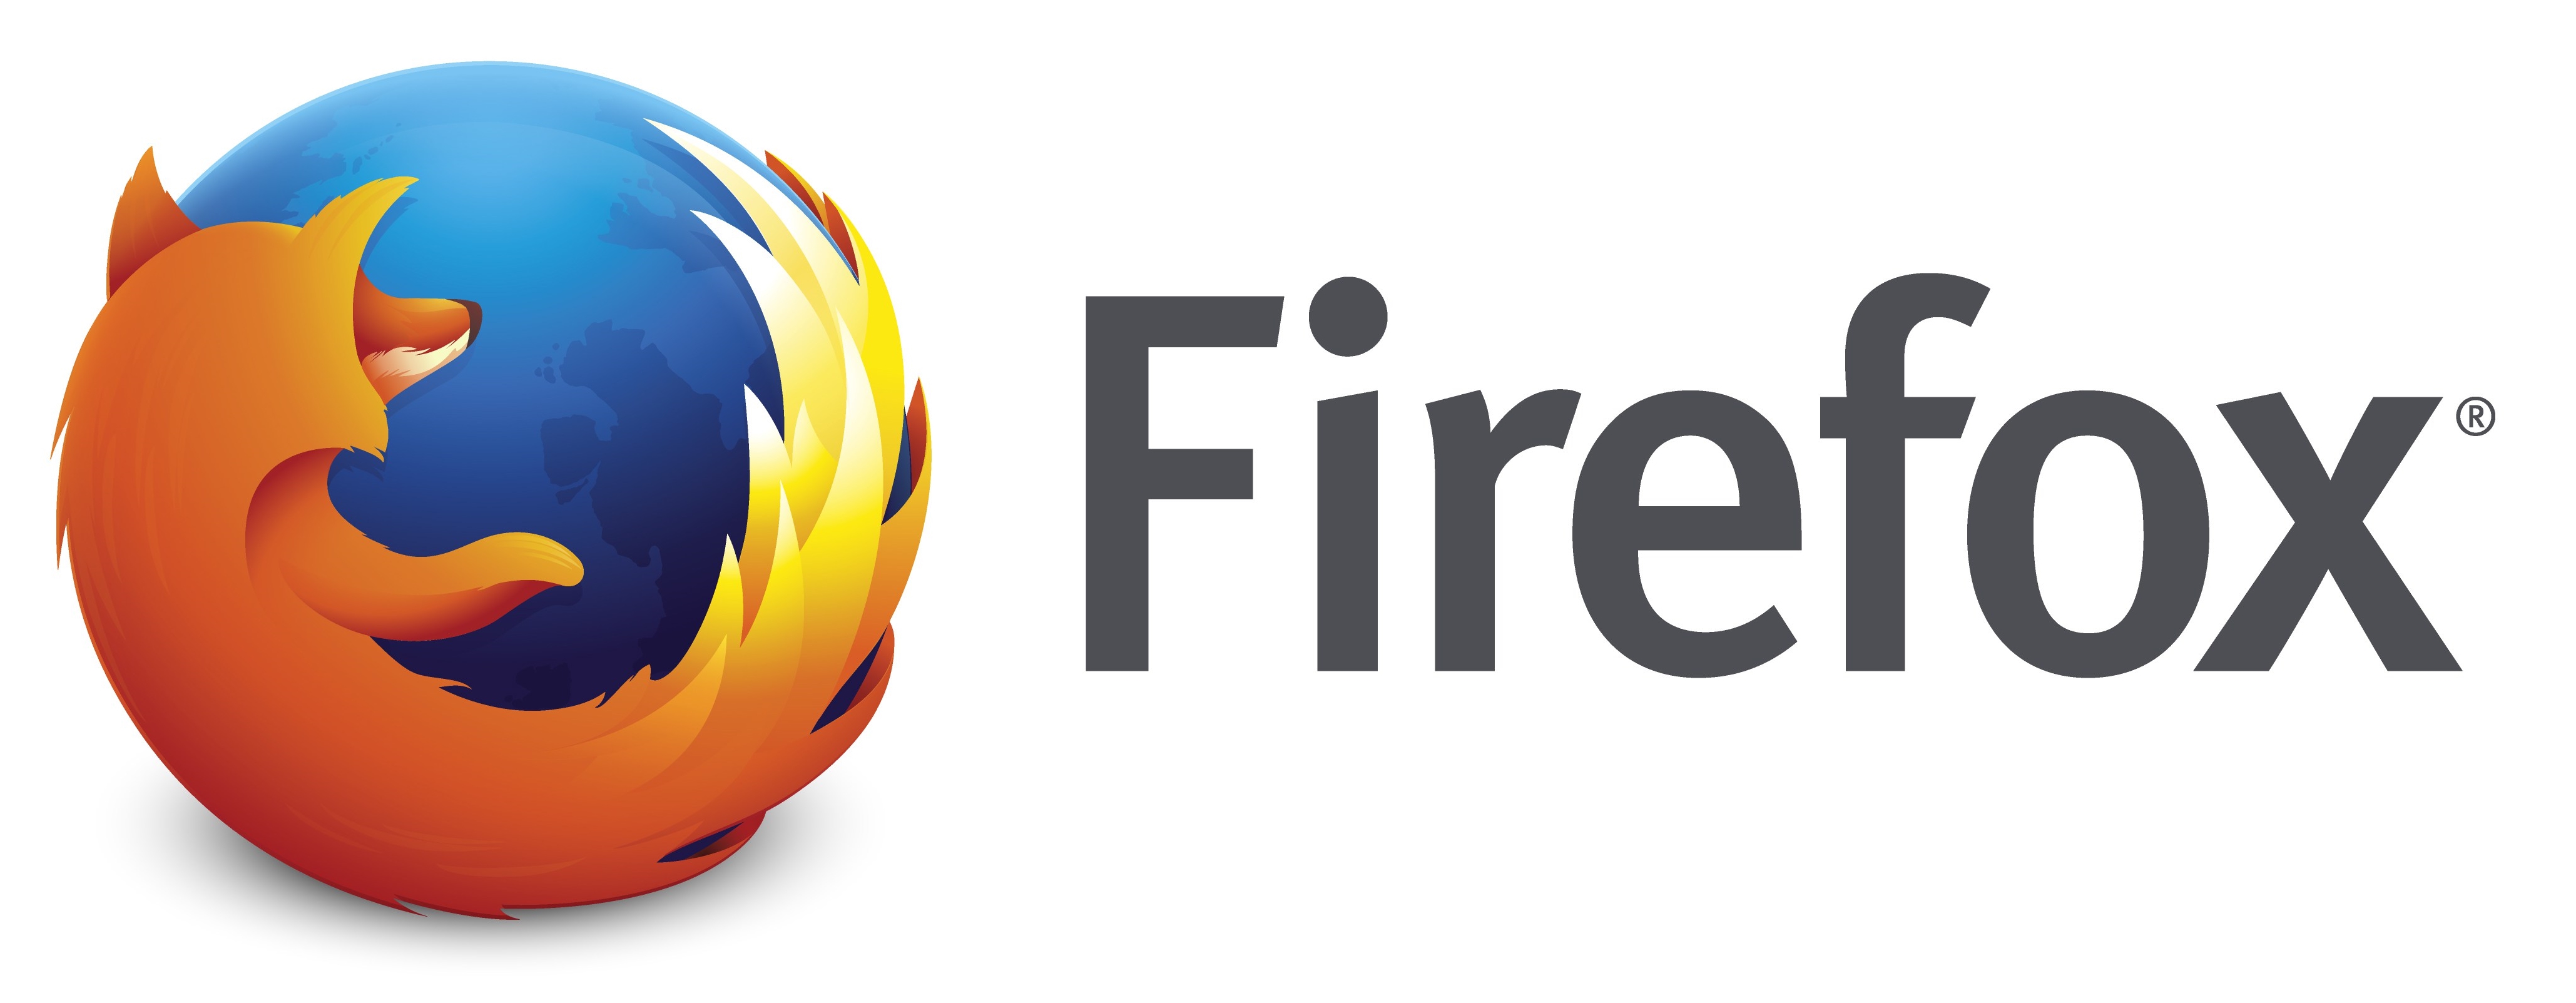 Firefox – Logos Download